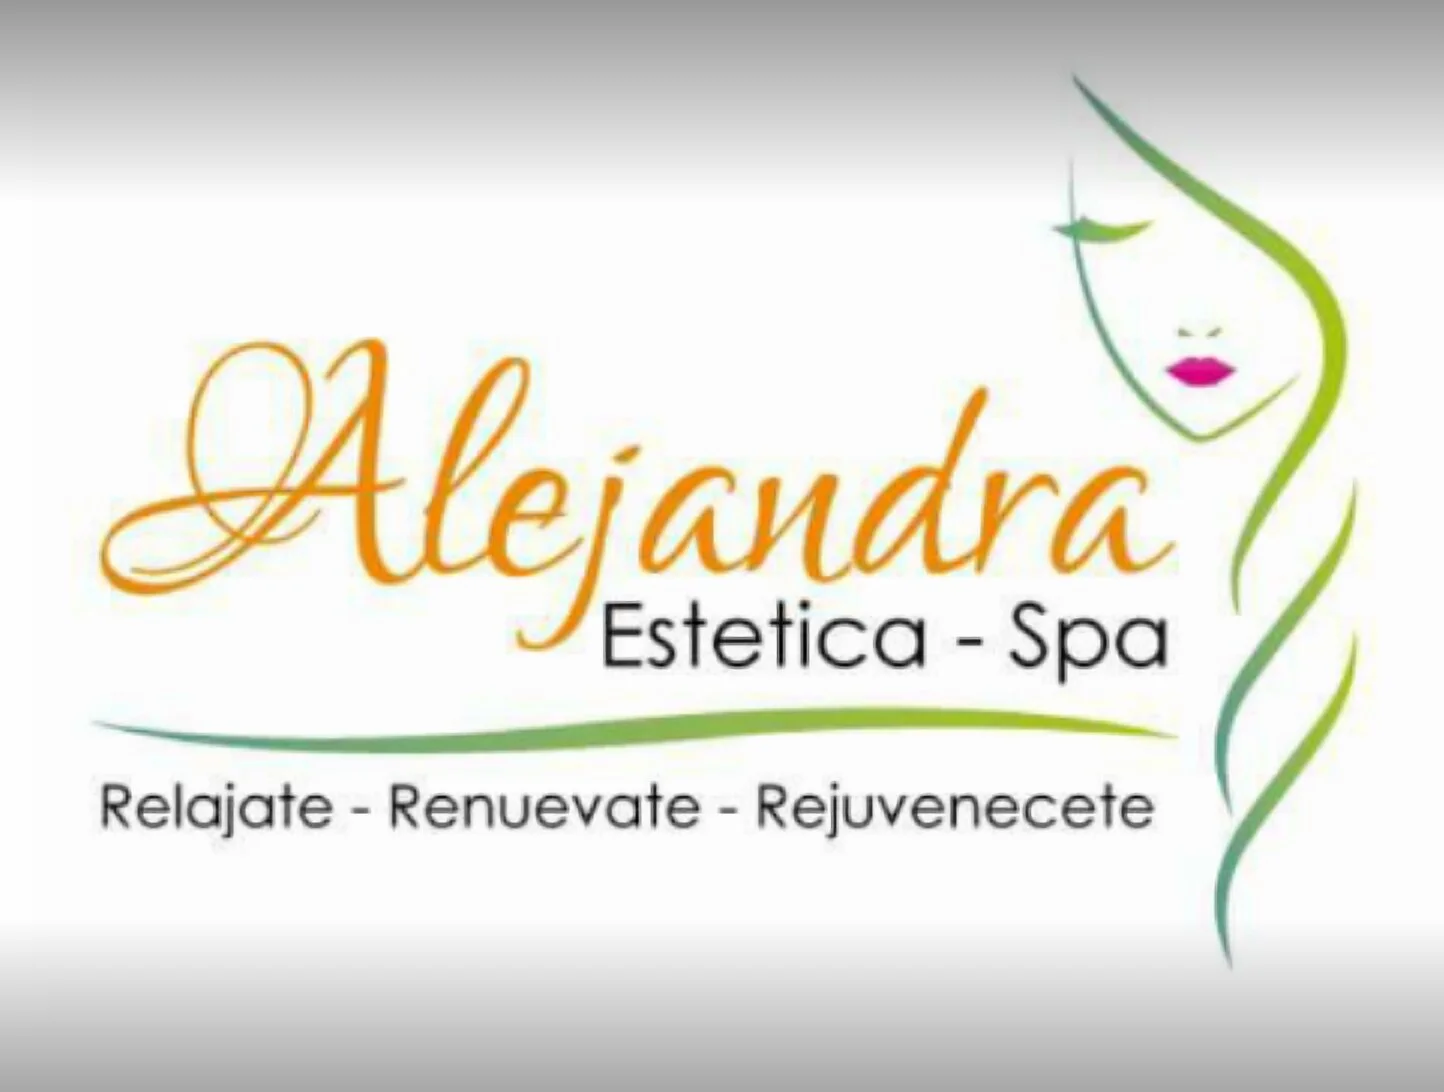 Spa-alejandra-estetica-spa-13034